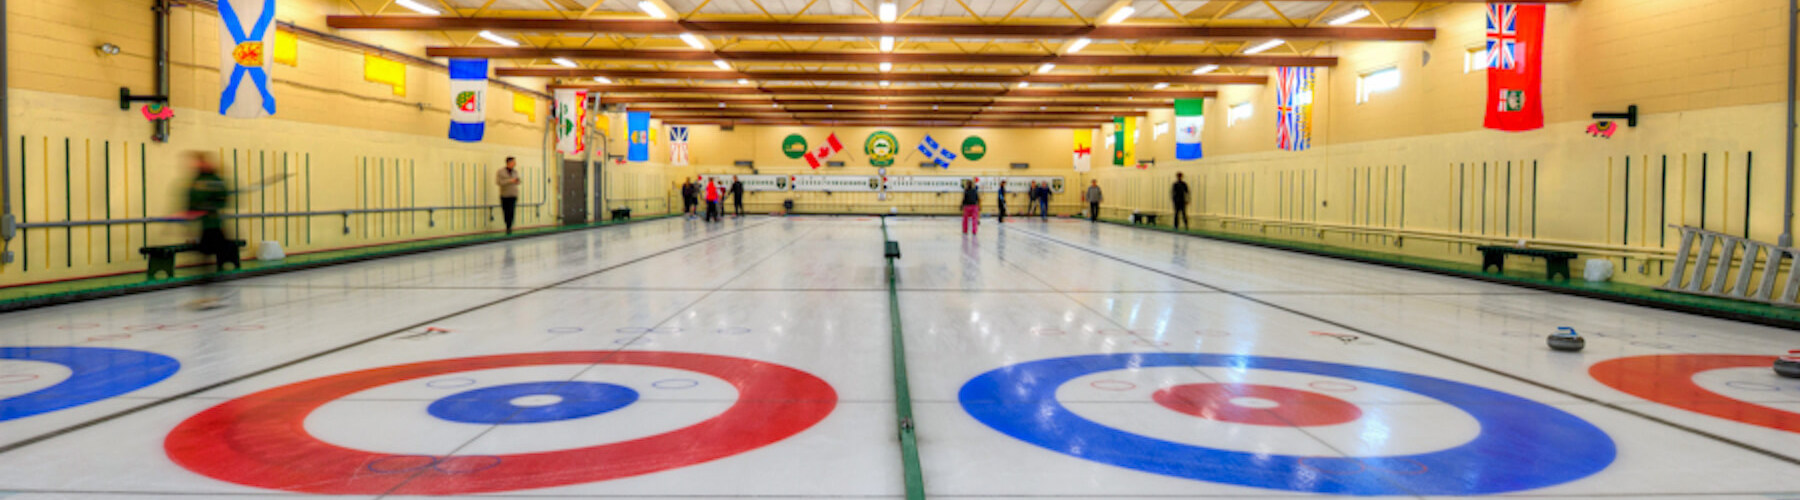 Whitlock Curling Rink